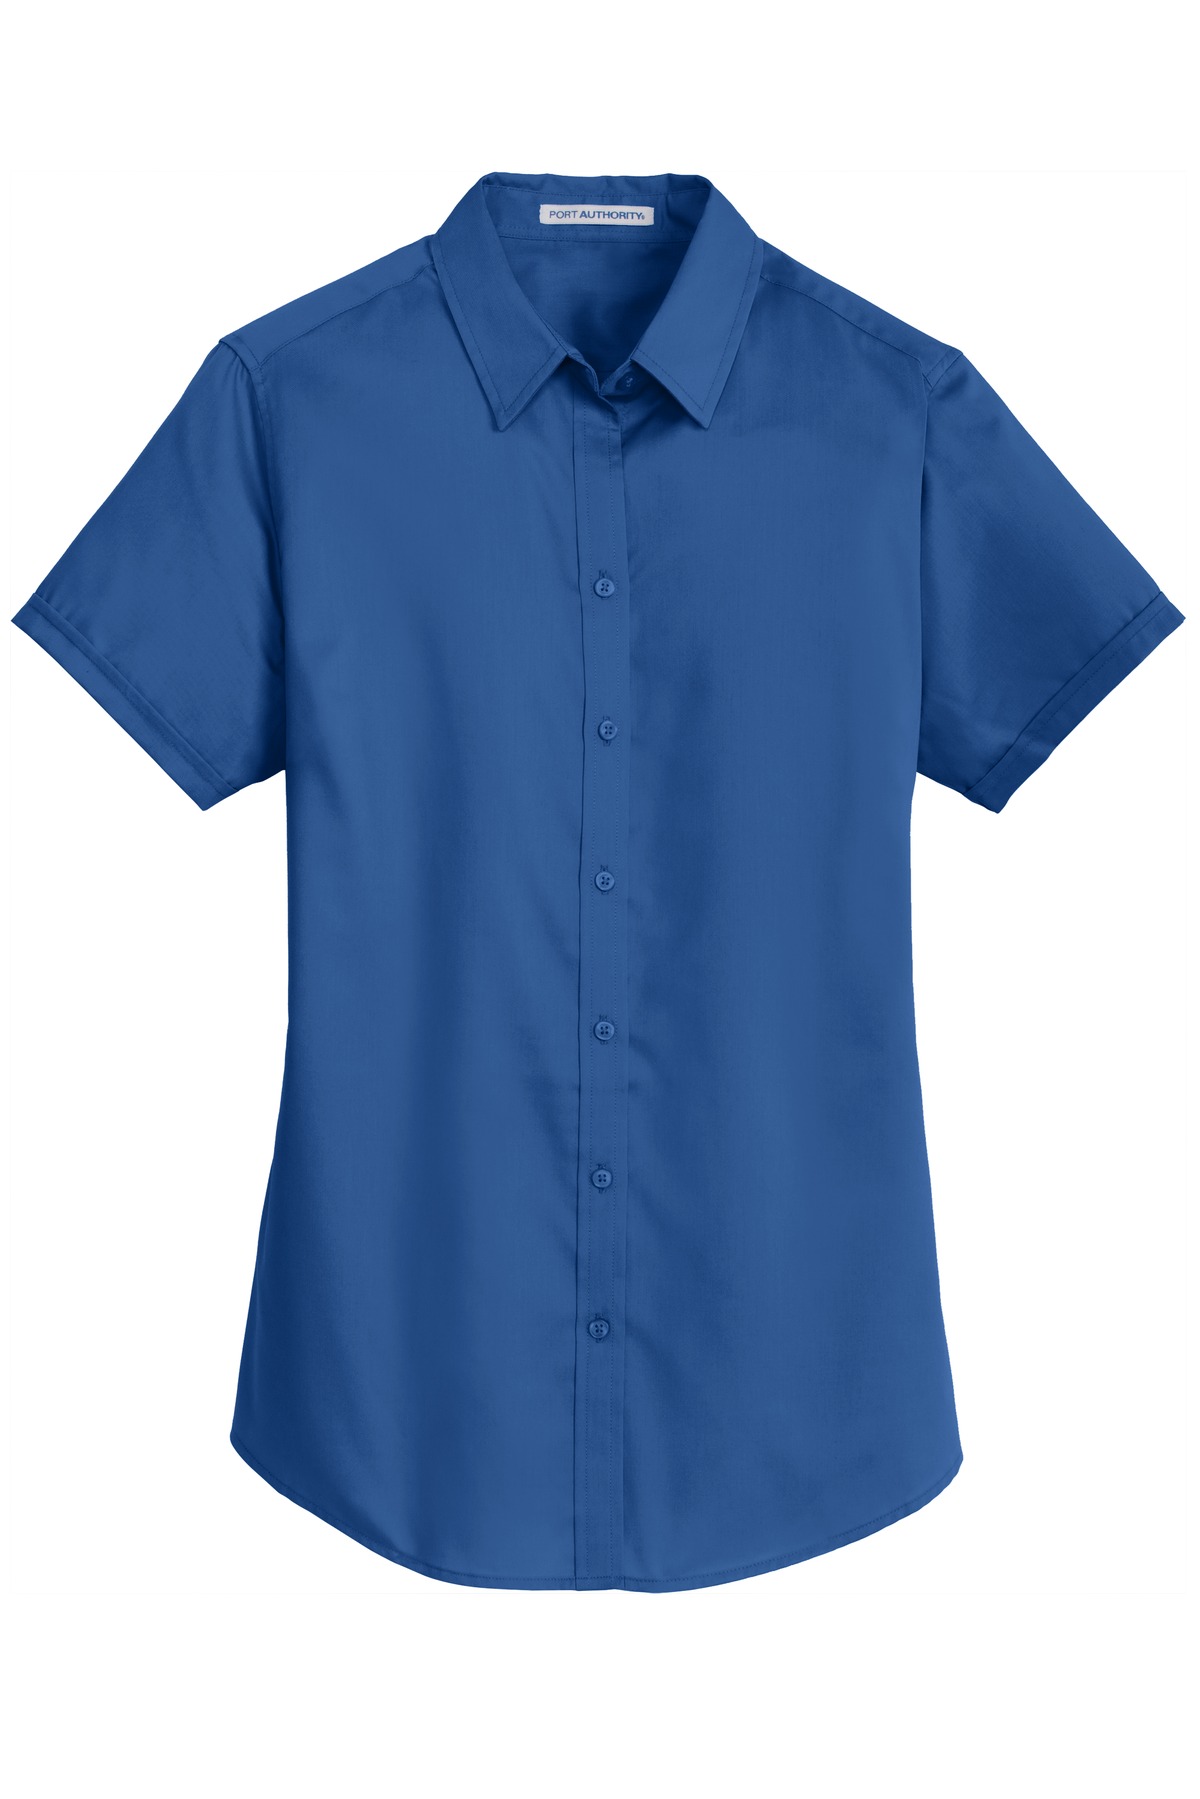 Port Authority Ladies Short Sleeve SuperPro Twill Shirt-M (True Blue) - image 5 of 6